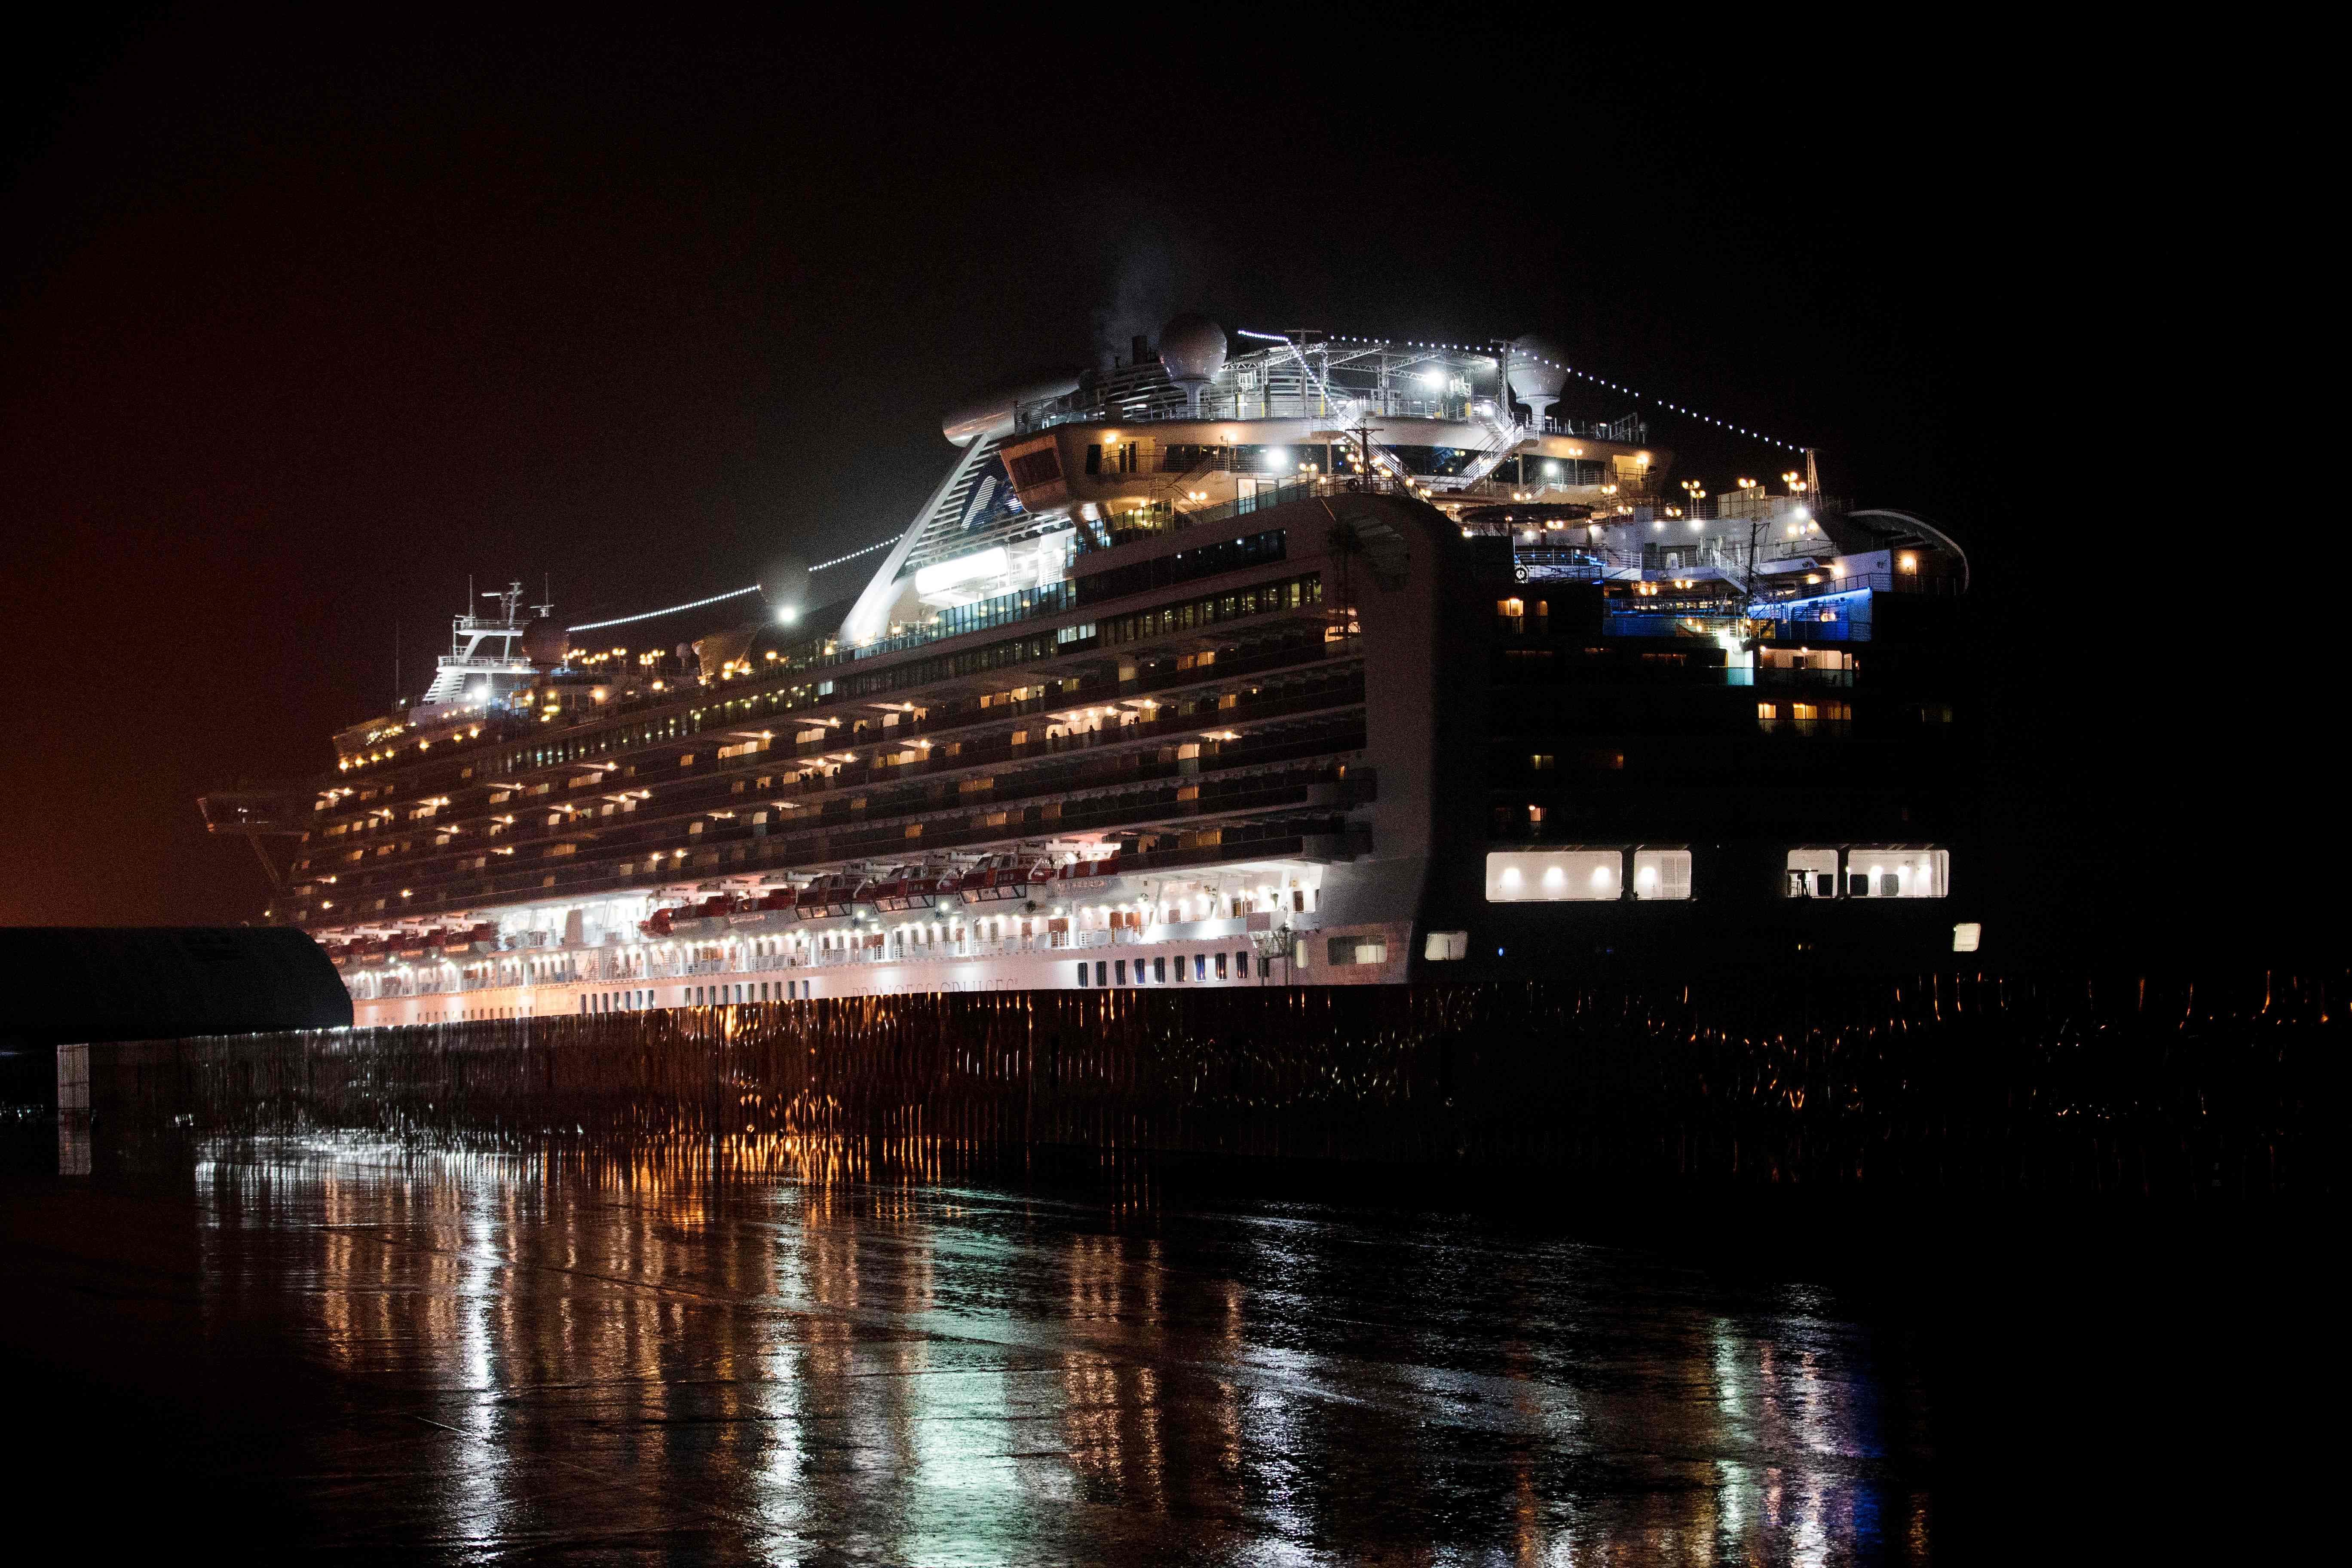 Diamond Princess cruise ship, with people quarantined onboard due to fears of the new COVID-19 coronavirus, is docked at the Daikaku Pier Cruise Terminal in Yokohama port on February 16, 2020. (Credit: AFP Photo)